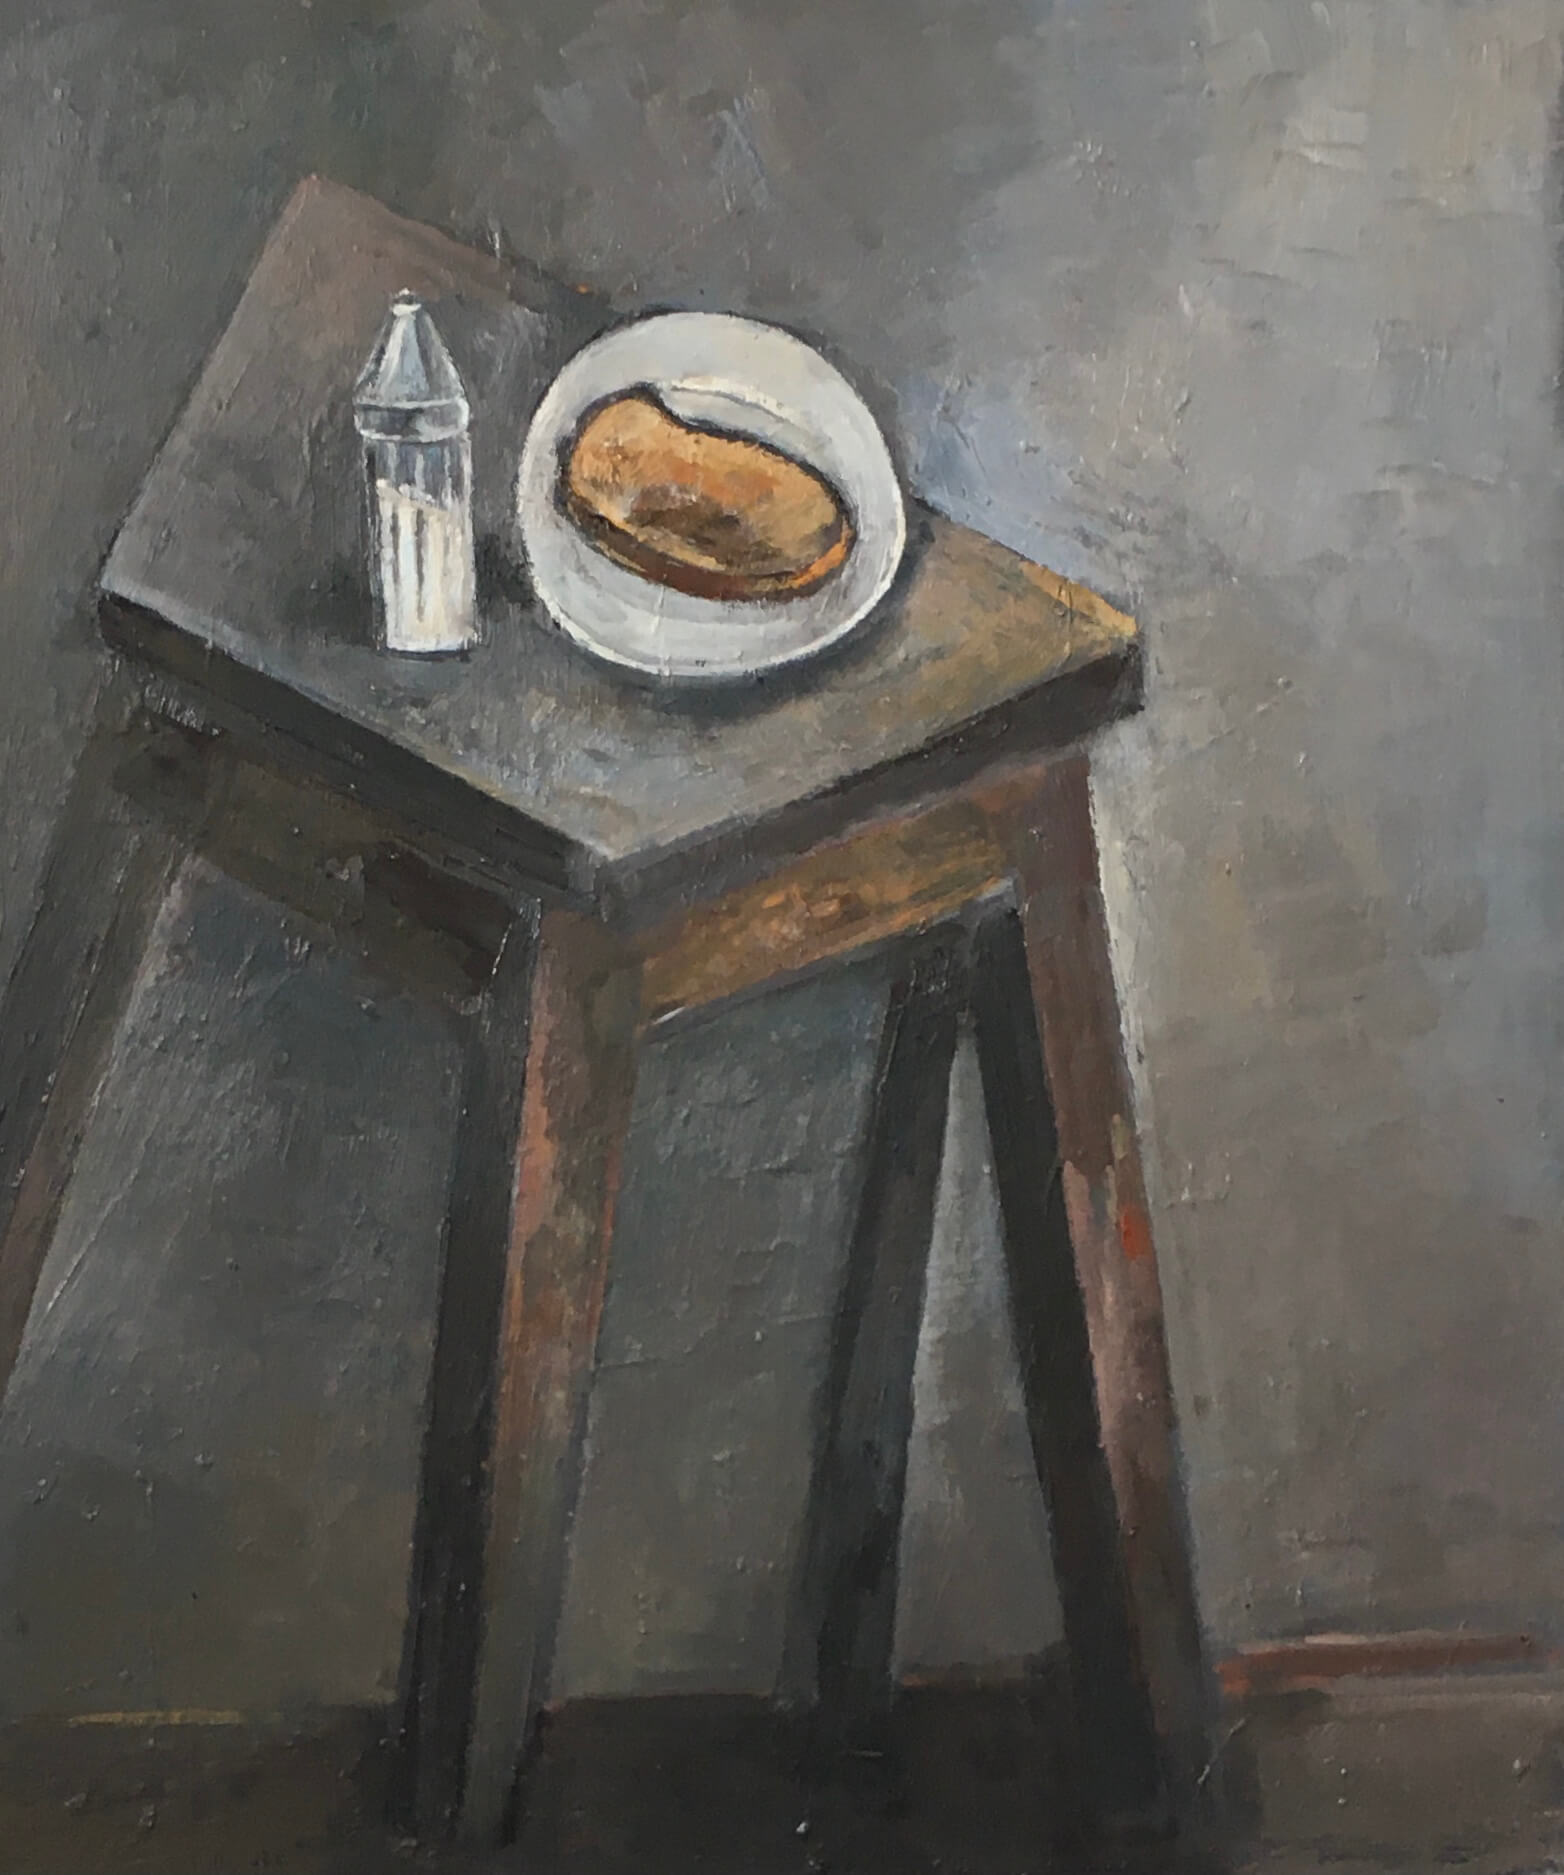 Ralf Kerbach, Salz und Brot, 2021, Öl auf Leinwand, 120 x 100 cm